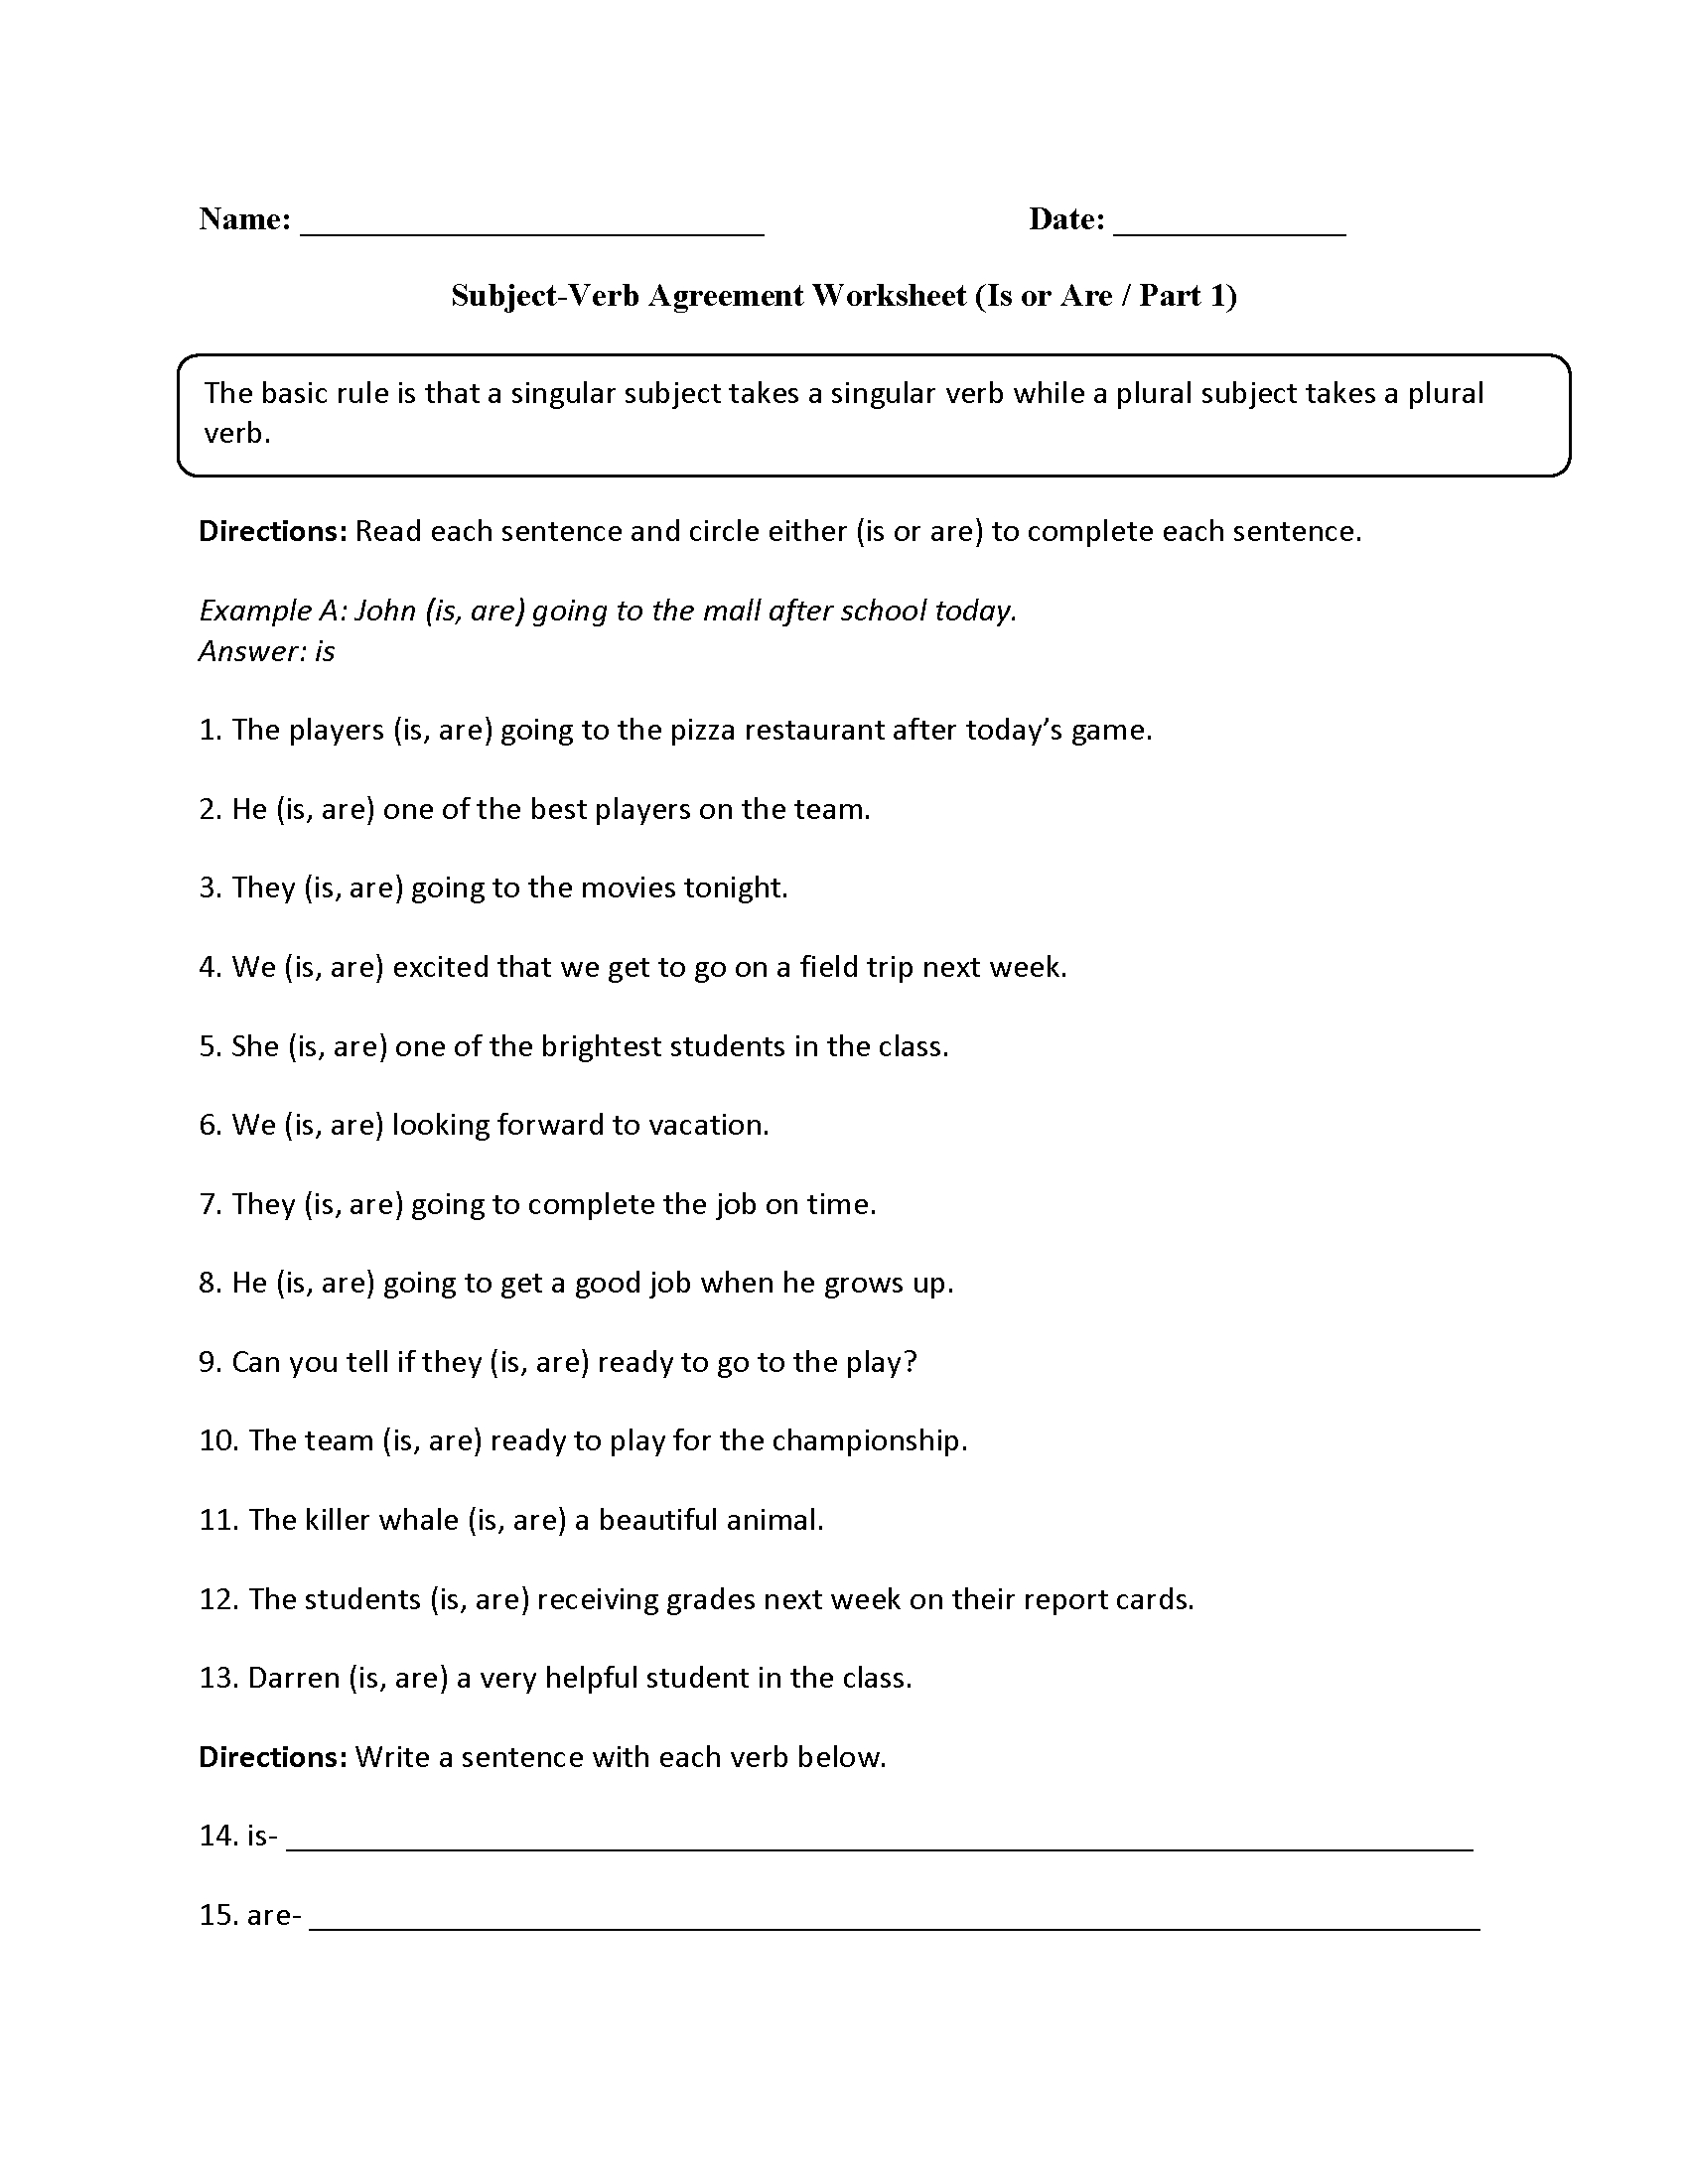 Verbs Worksheets | Subject Verb Agreement Worksheets | Subject Verb Agreement Printable Worksheets High School